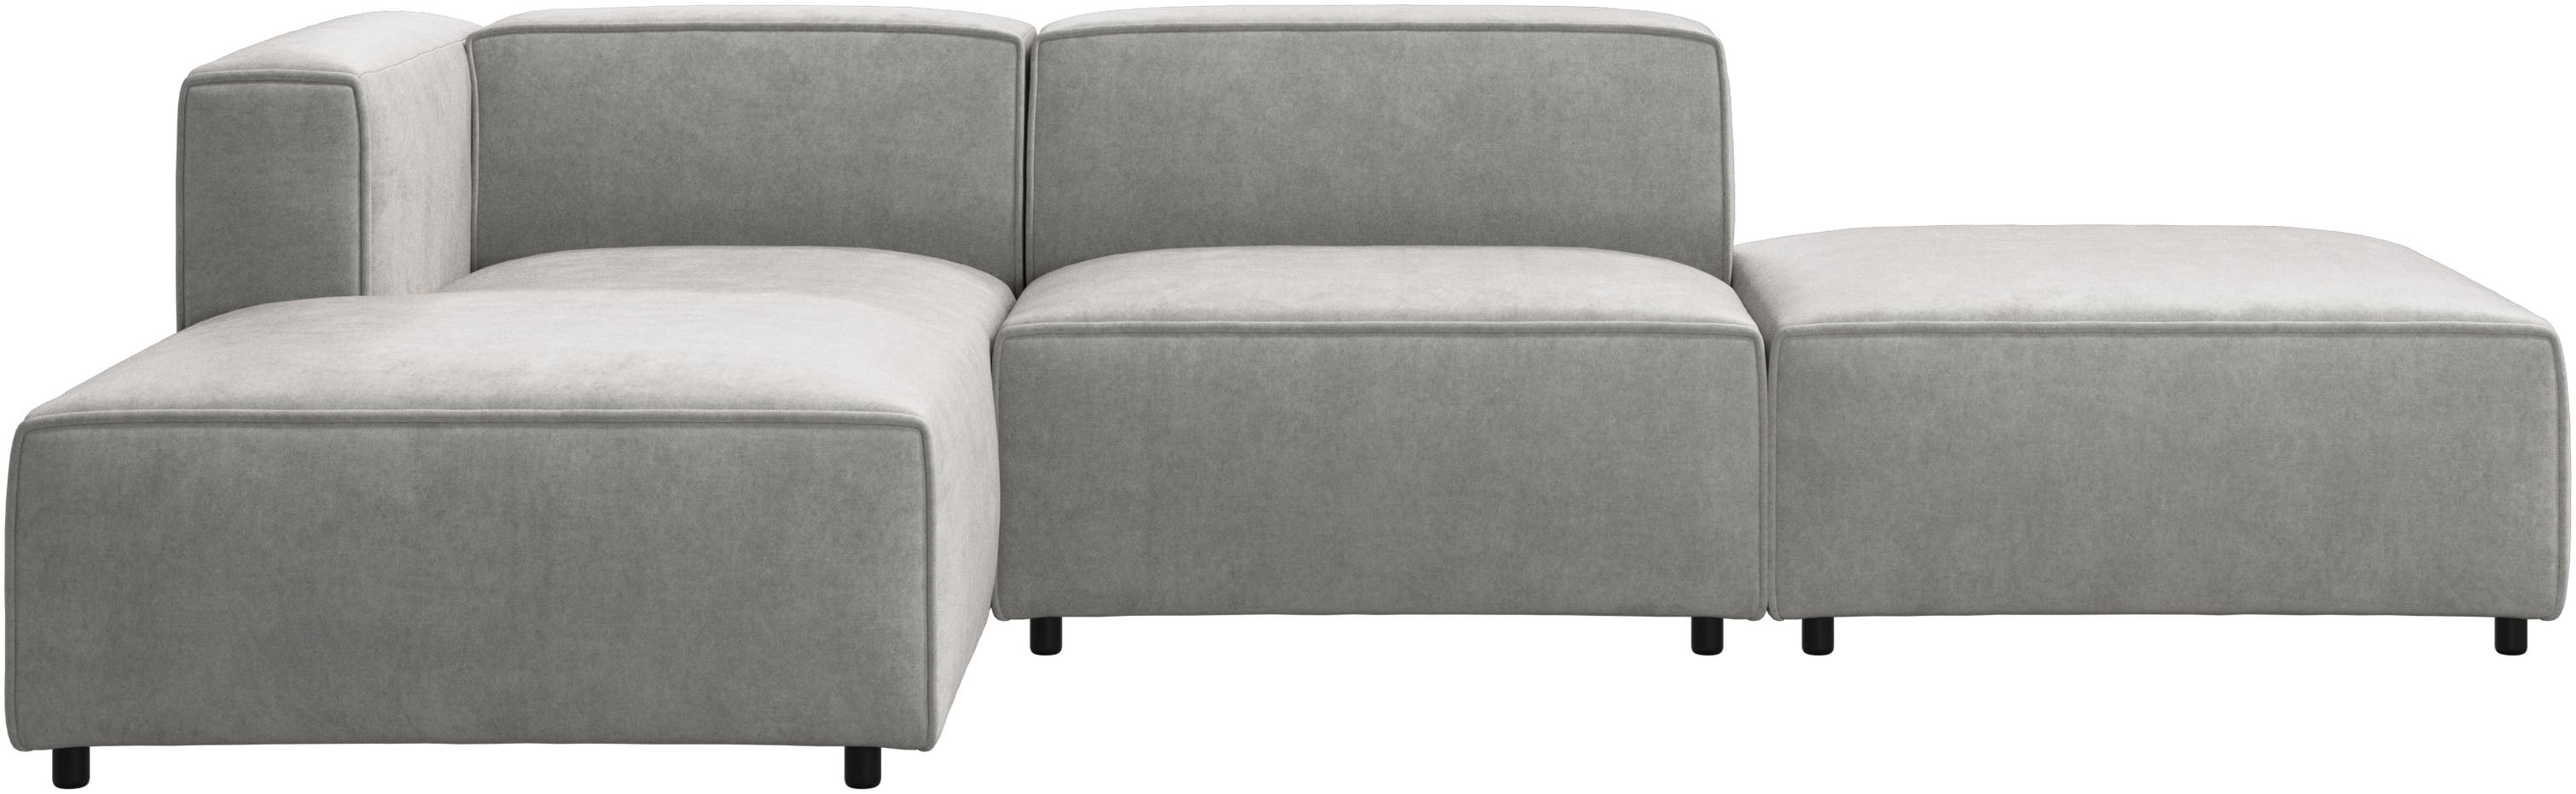 Carmo sofa med lounging- og hvilemodul